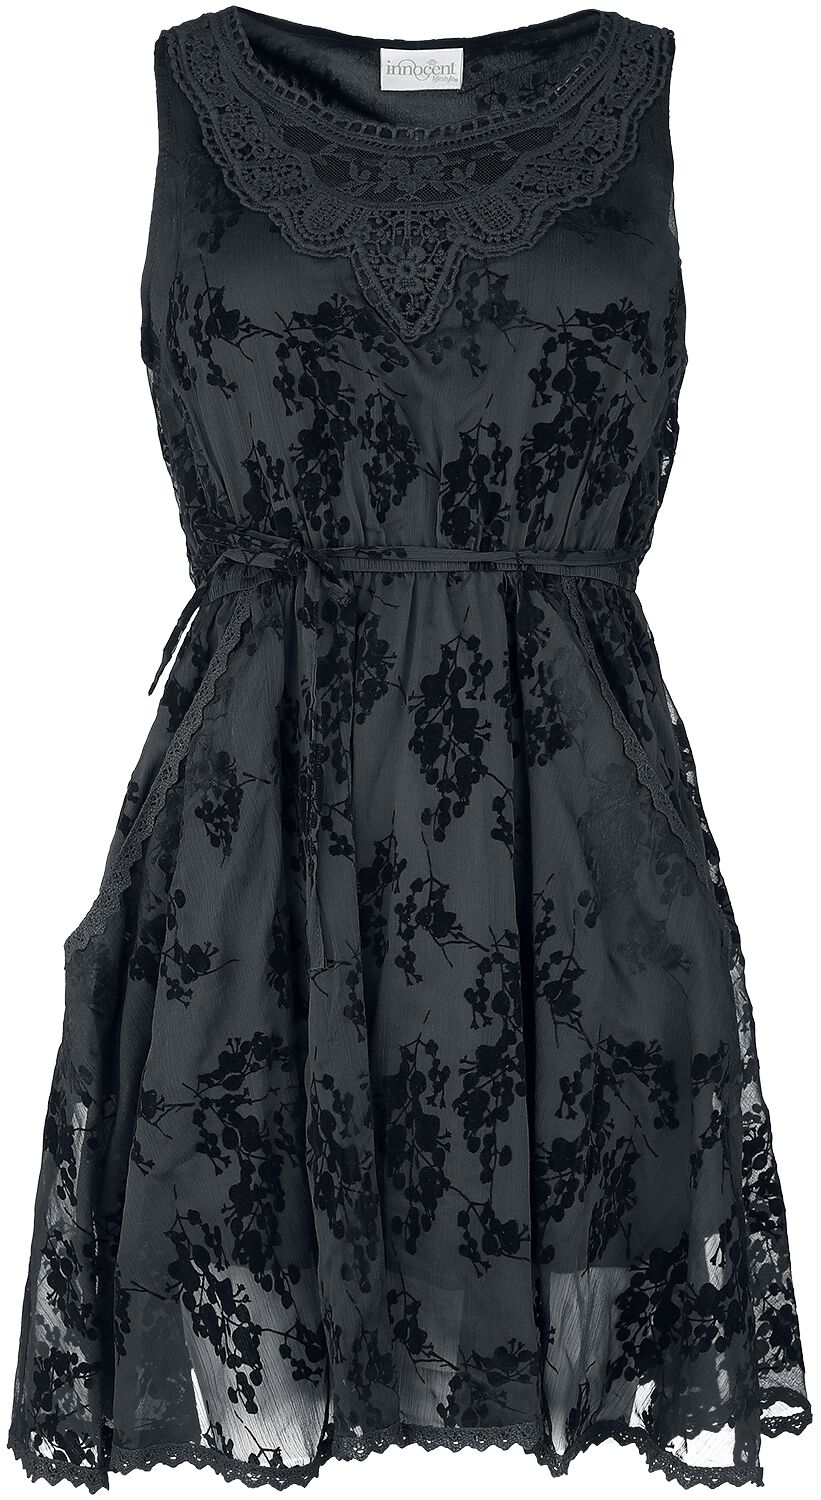 Innocent Ilsa Dress Kurzes Kleid schwarz in XL